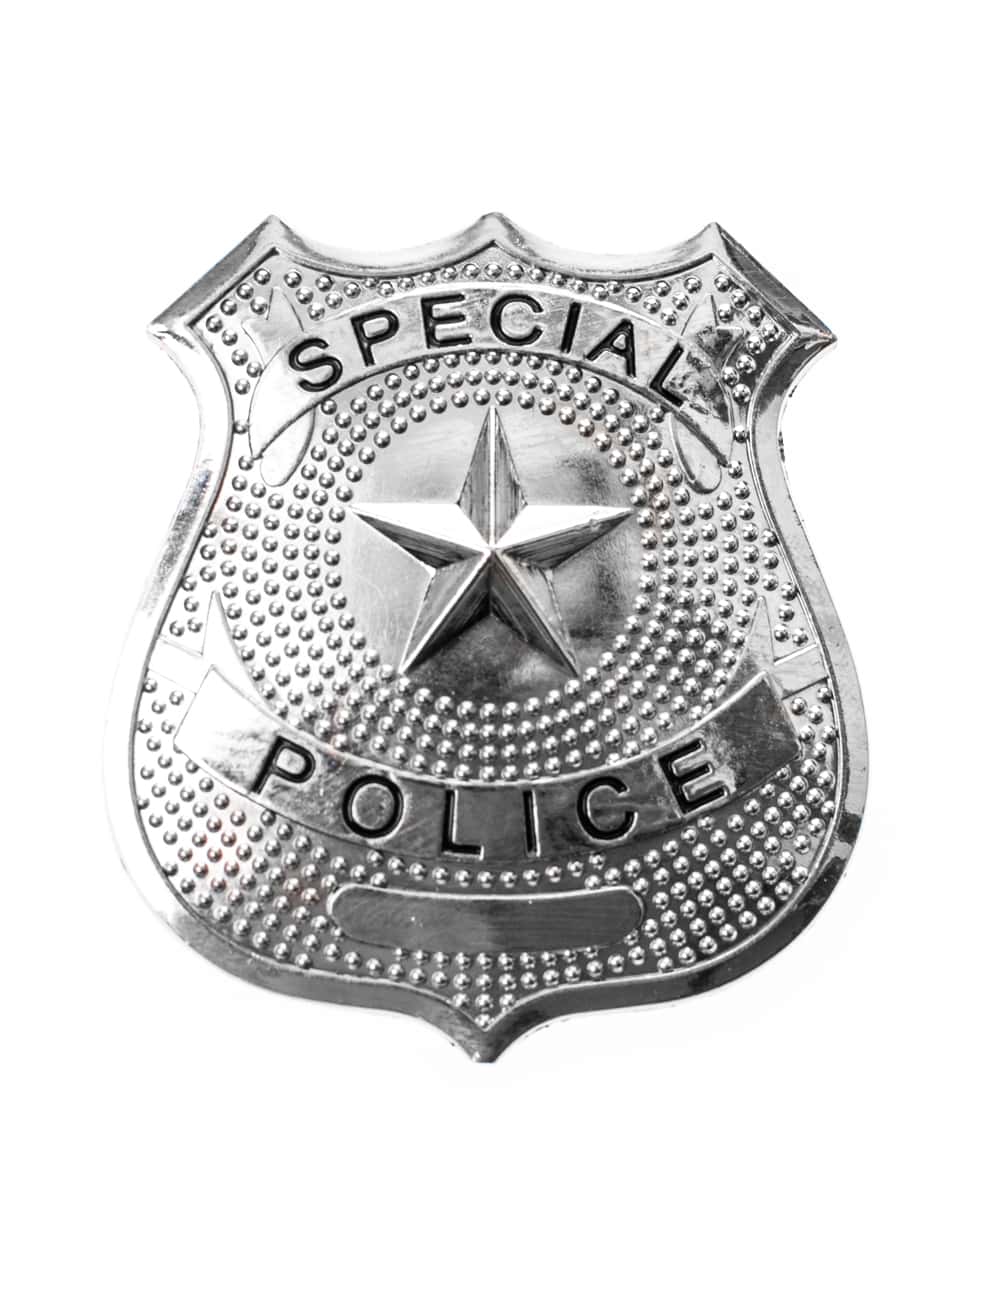 Polizeimarke Special Police silber